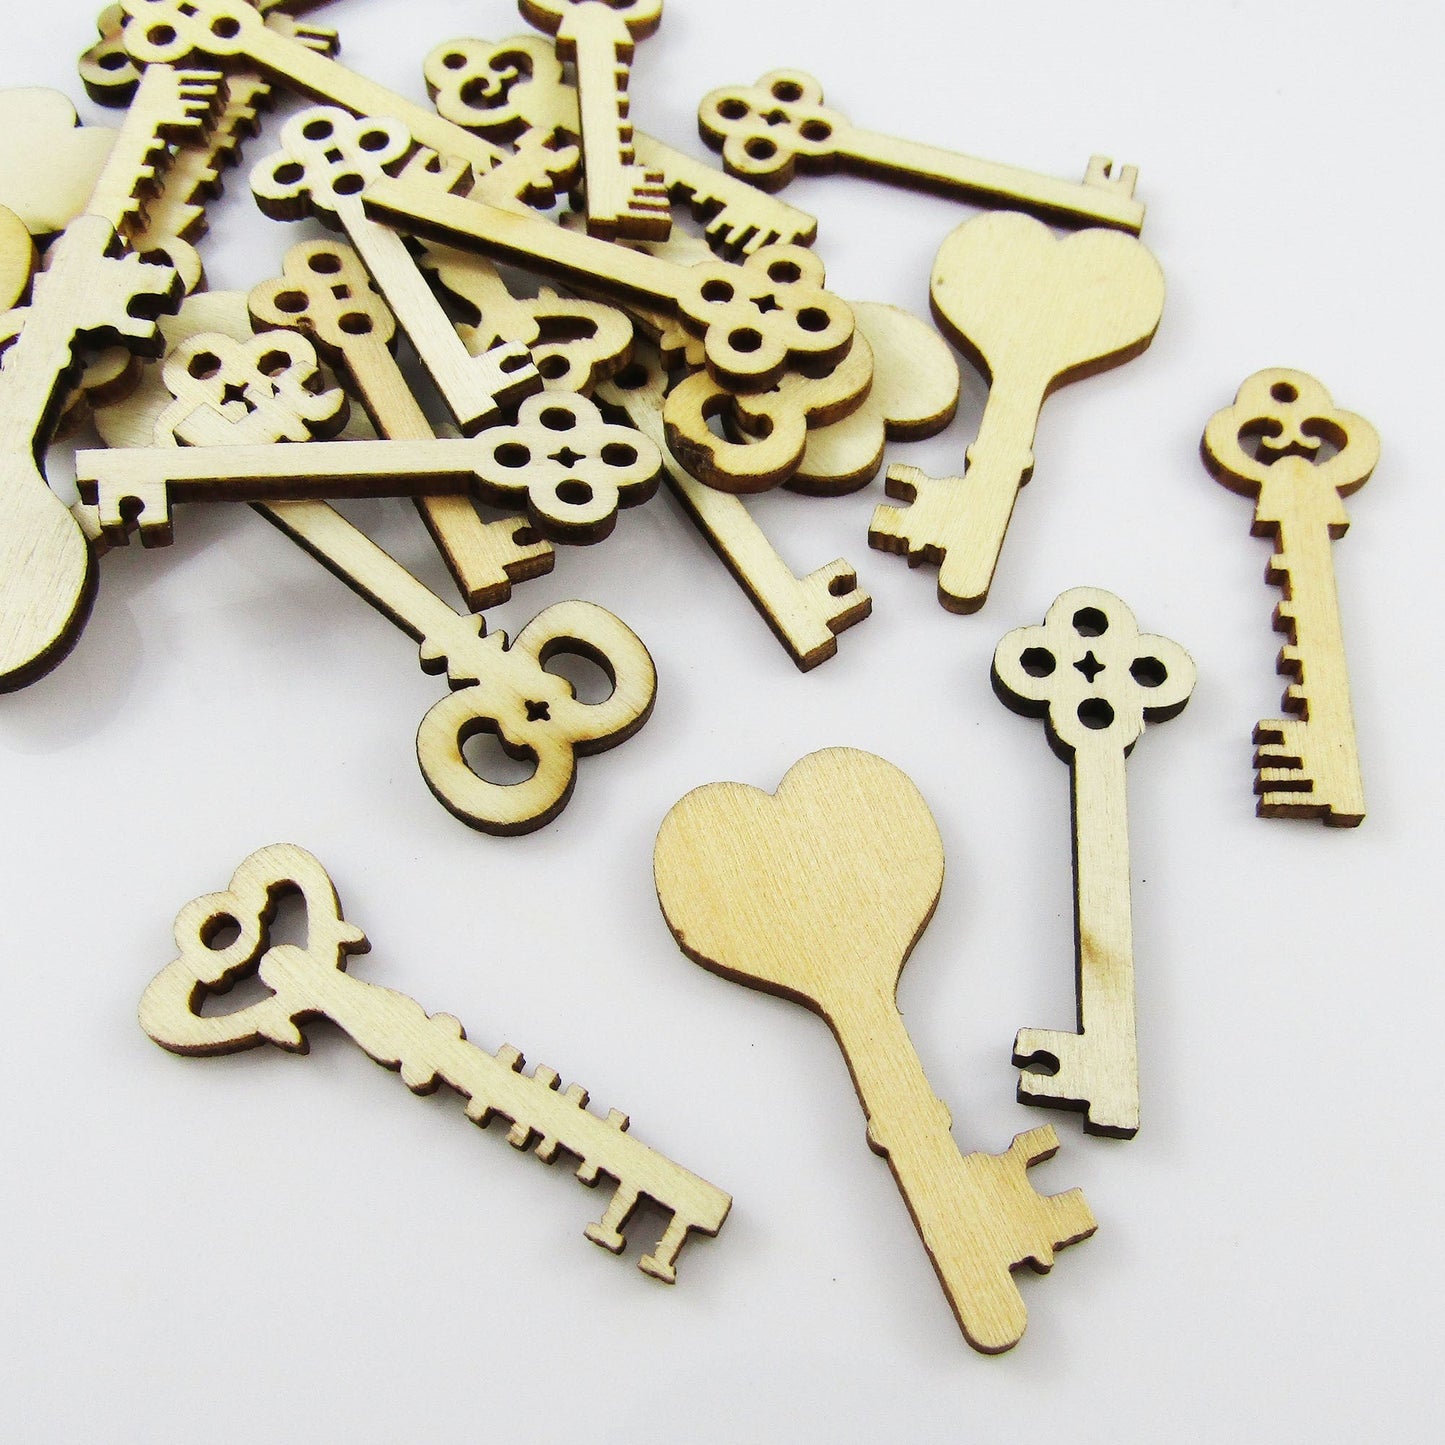 20pcs Laser Cut Wood Antique Keys Cabochons Scrapbooking Cards & More!